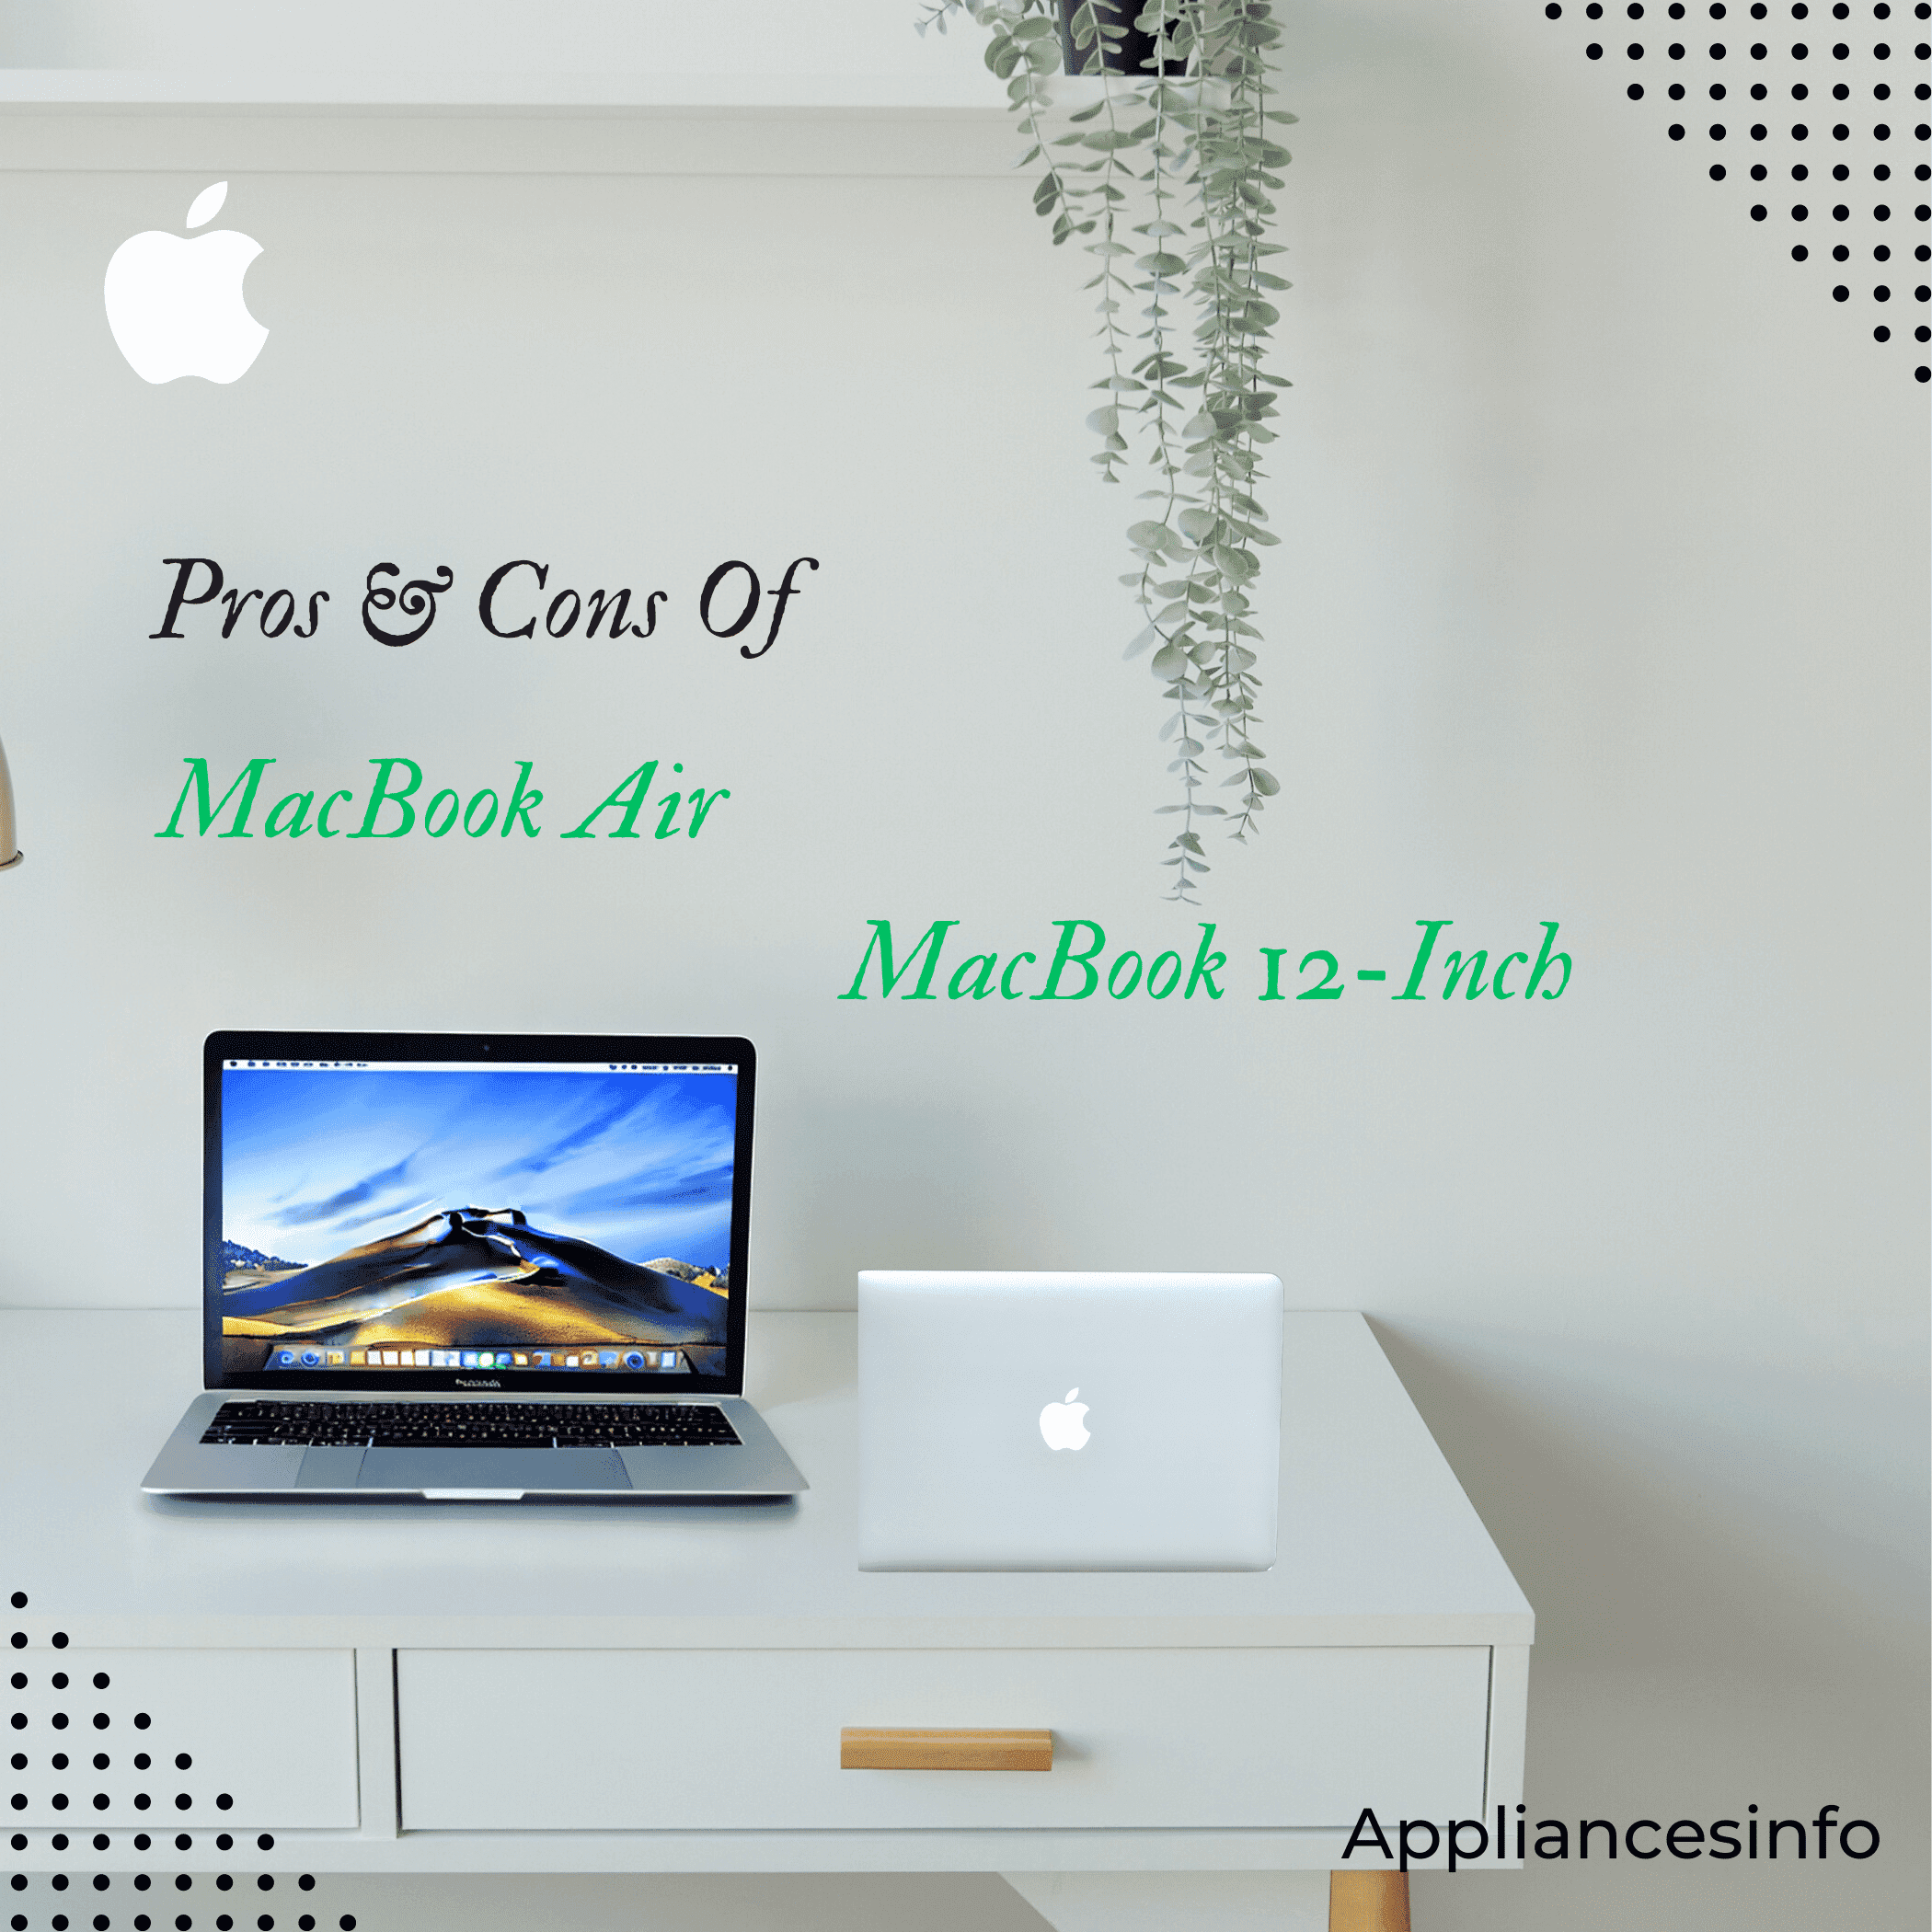 Pros and Cons of 12-inch MacBook versus MacBook Air